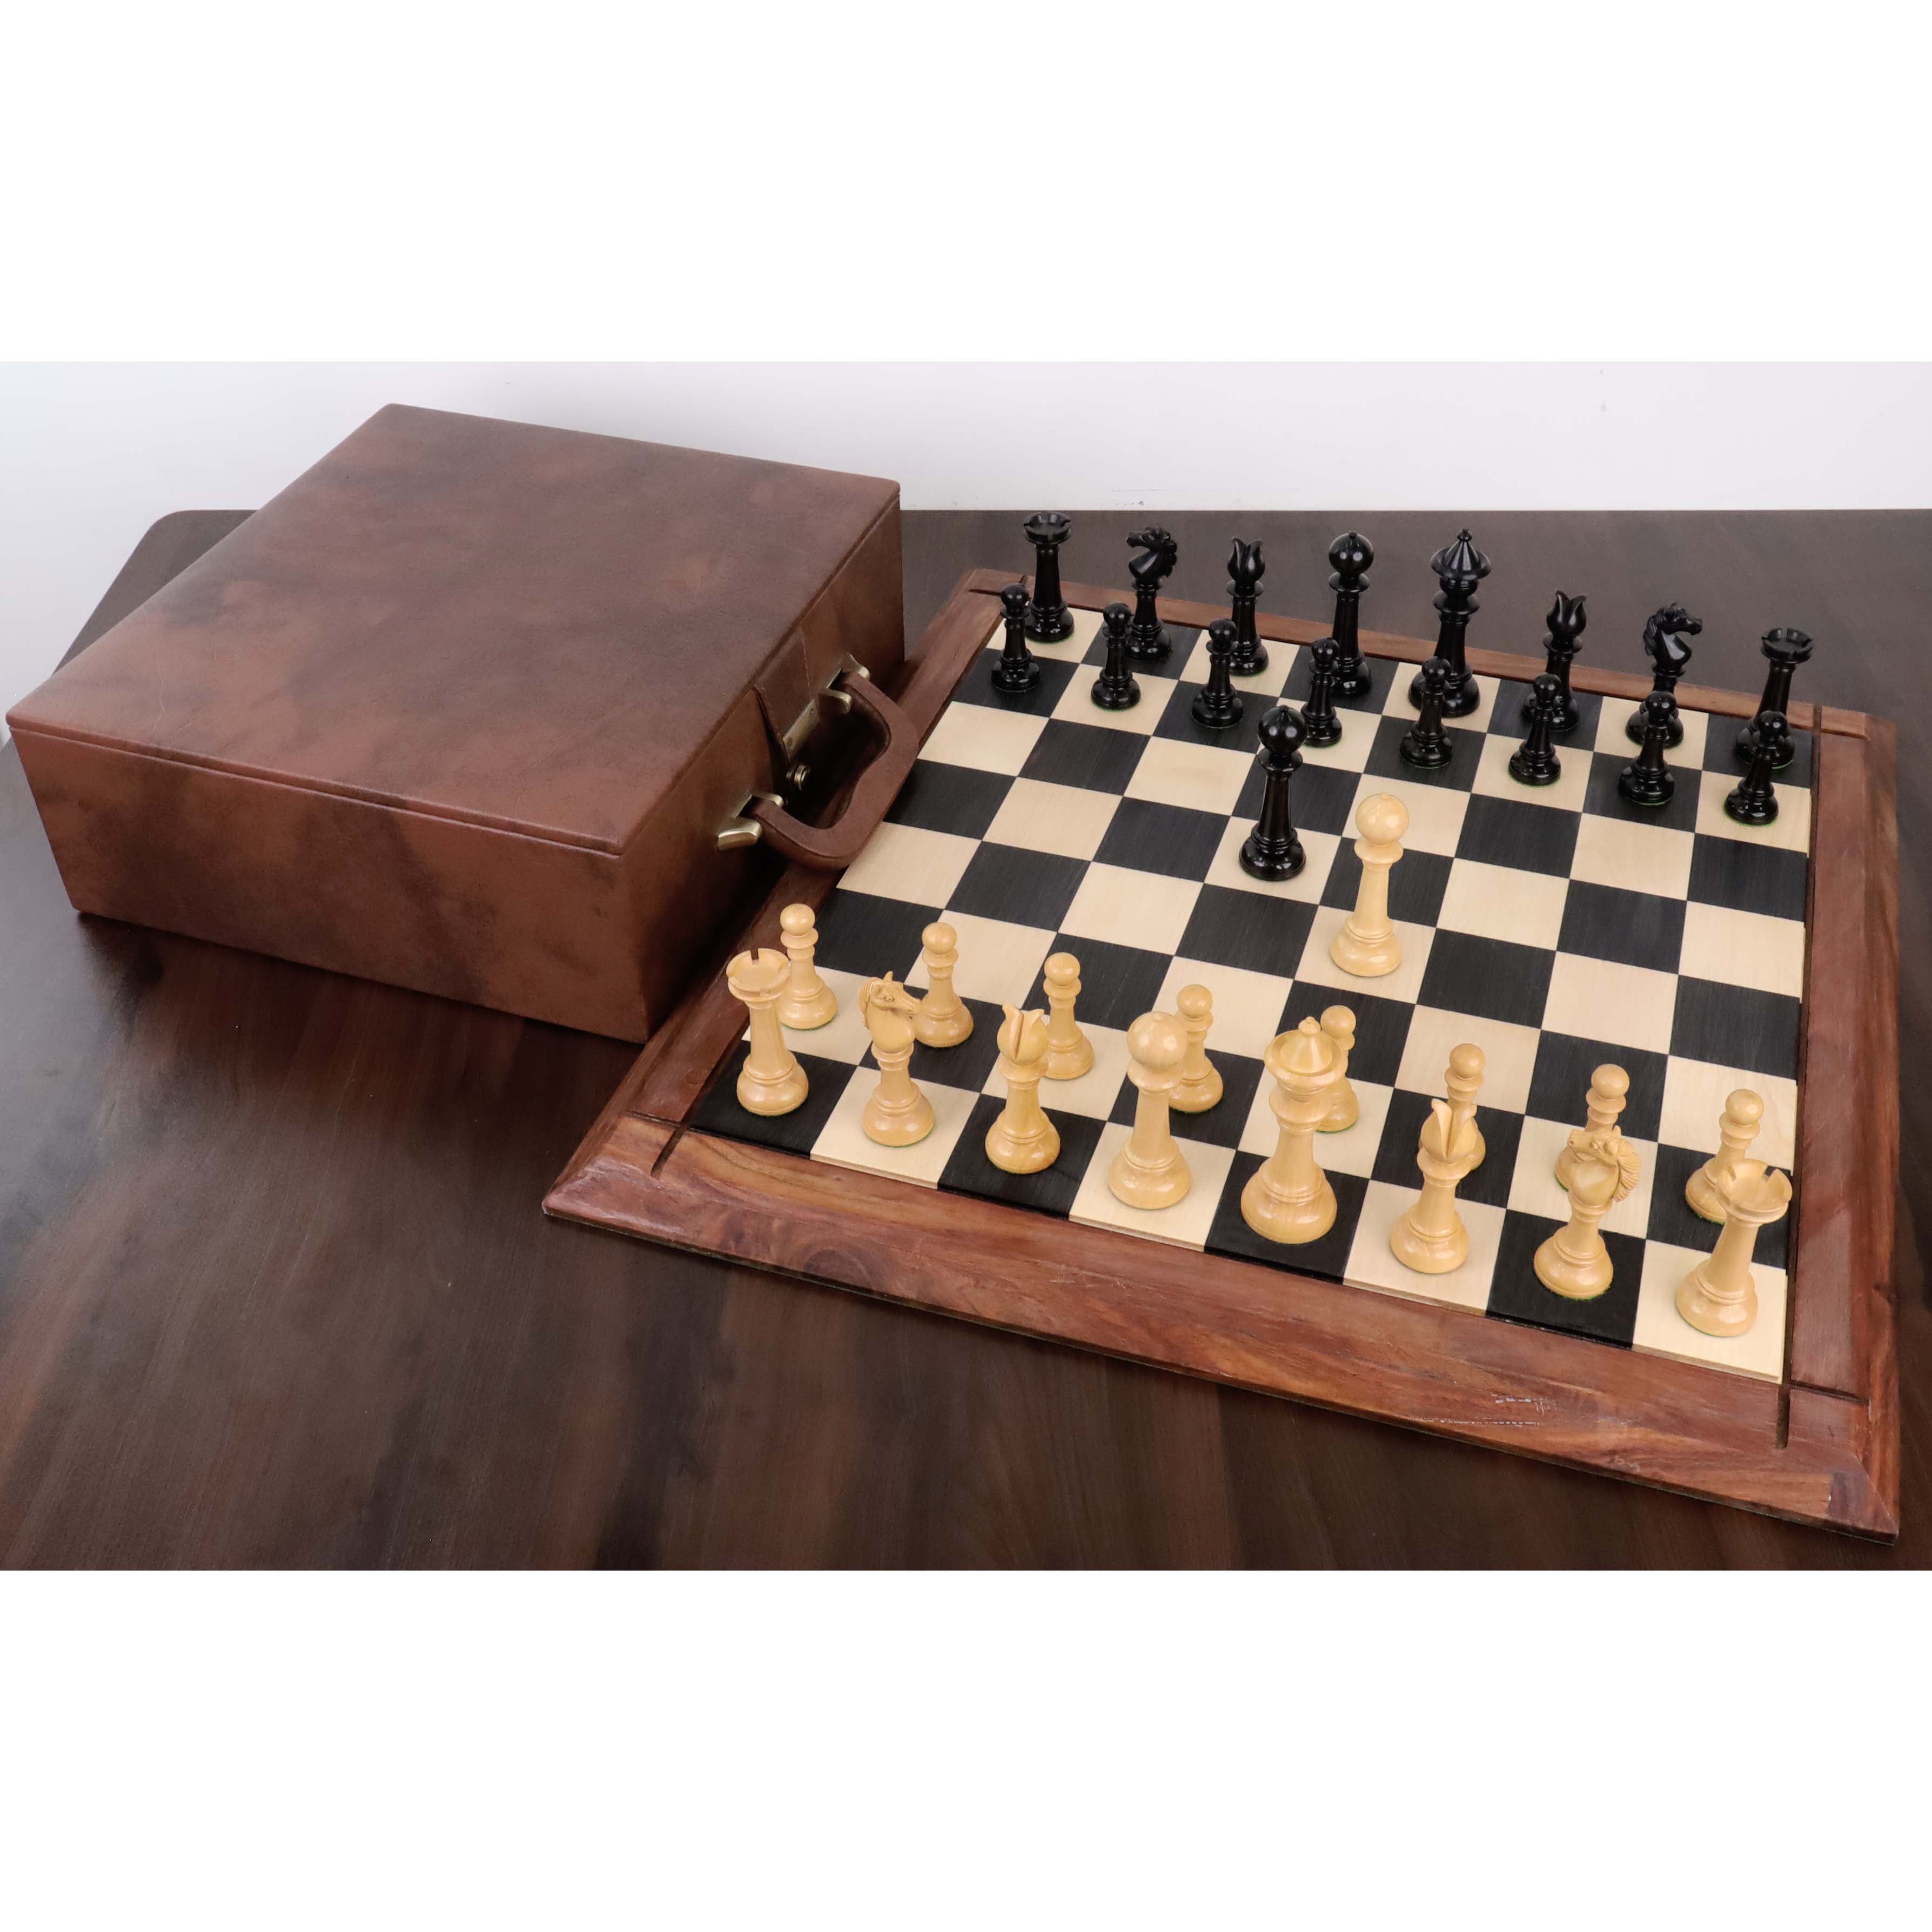 4" Edinburgh Northern Upright Pre-Staunton Chess Set- Chess Pieces Only - Ebony Wood